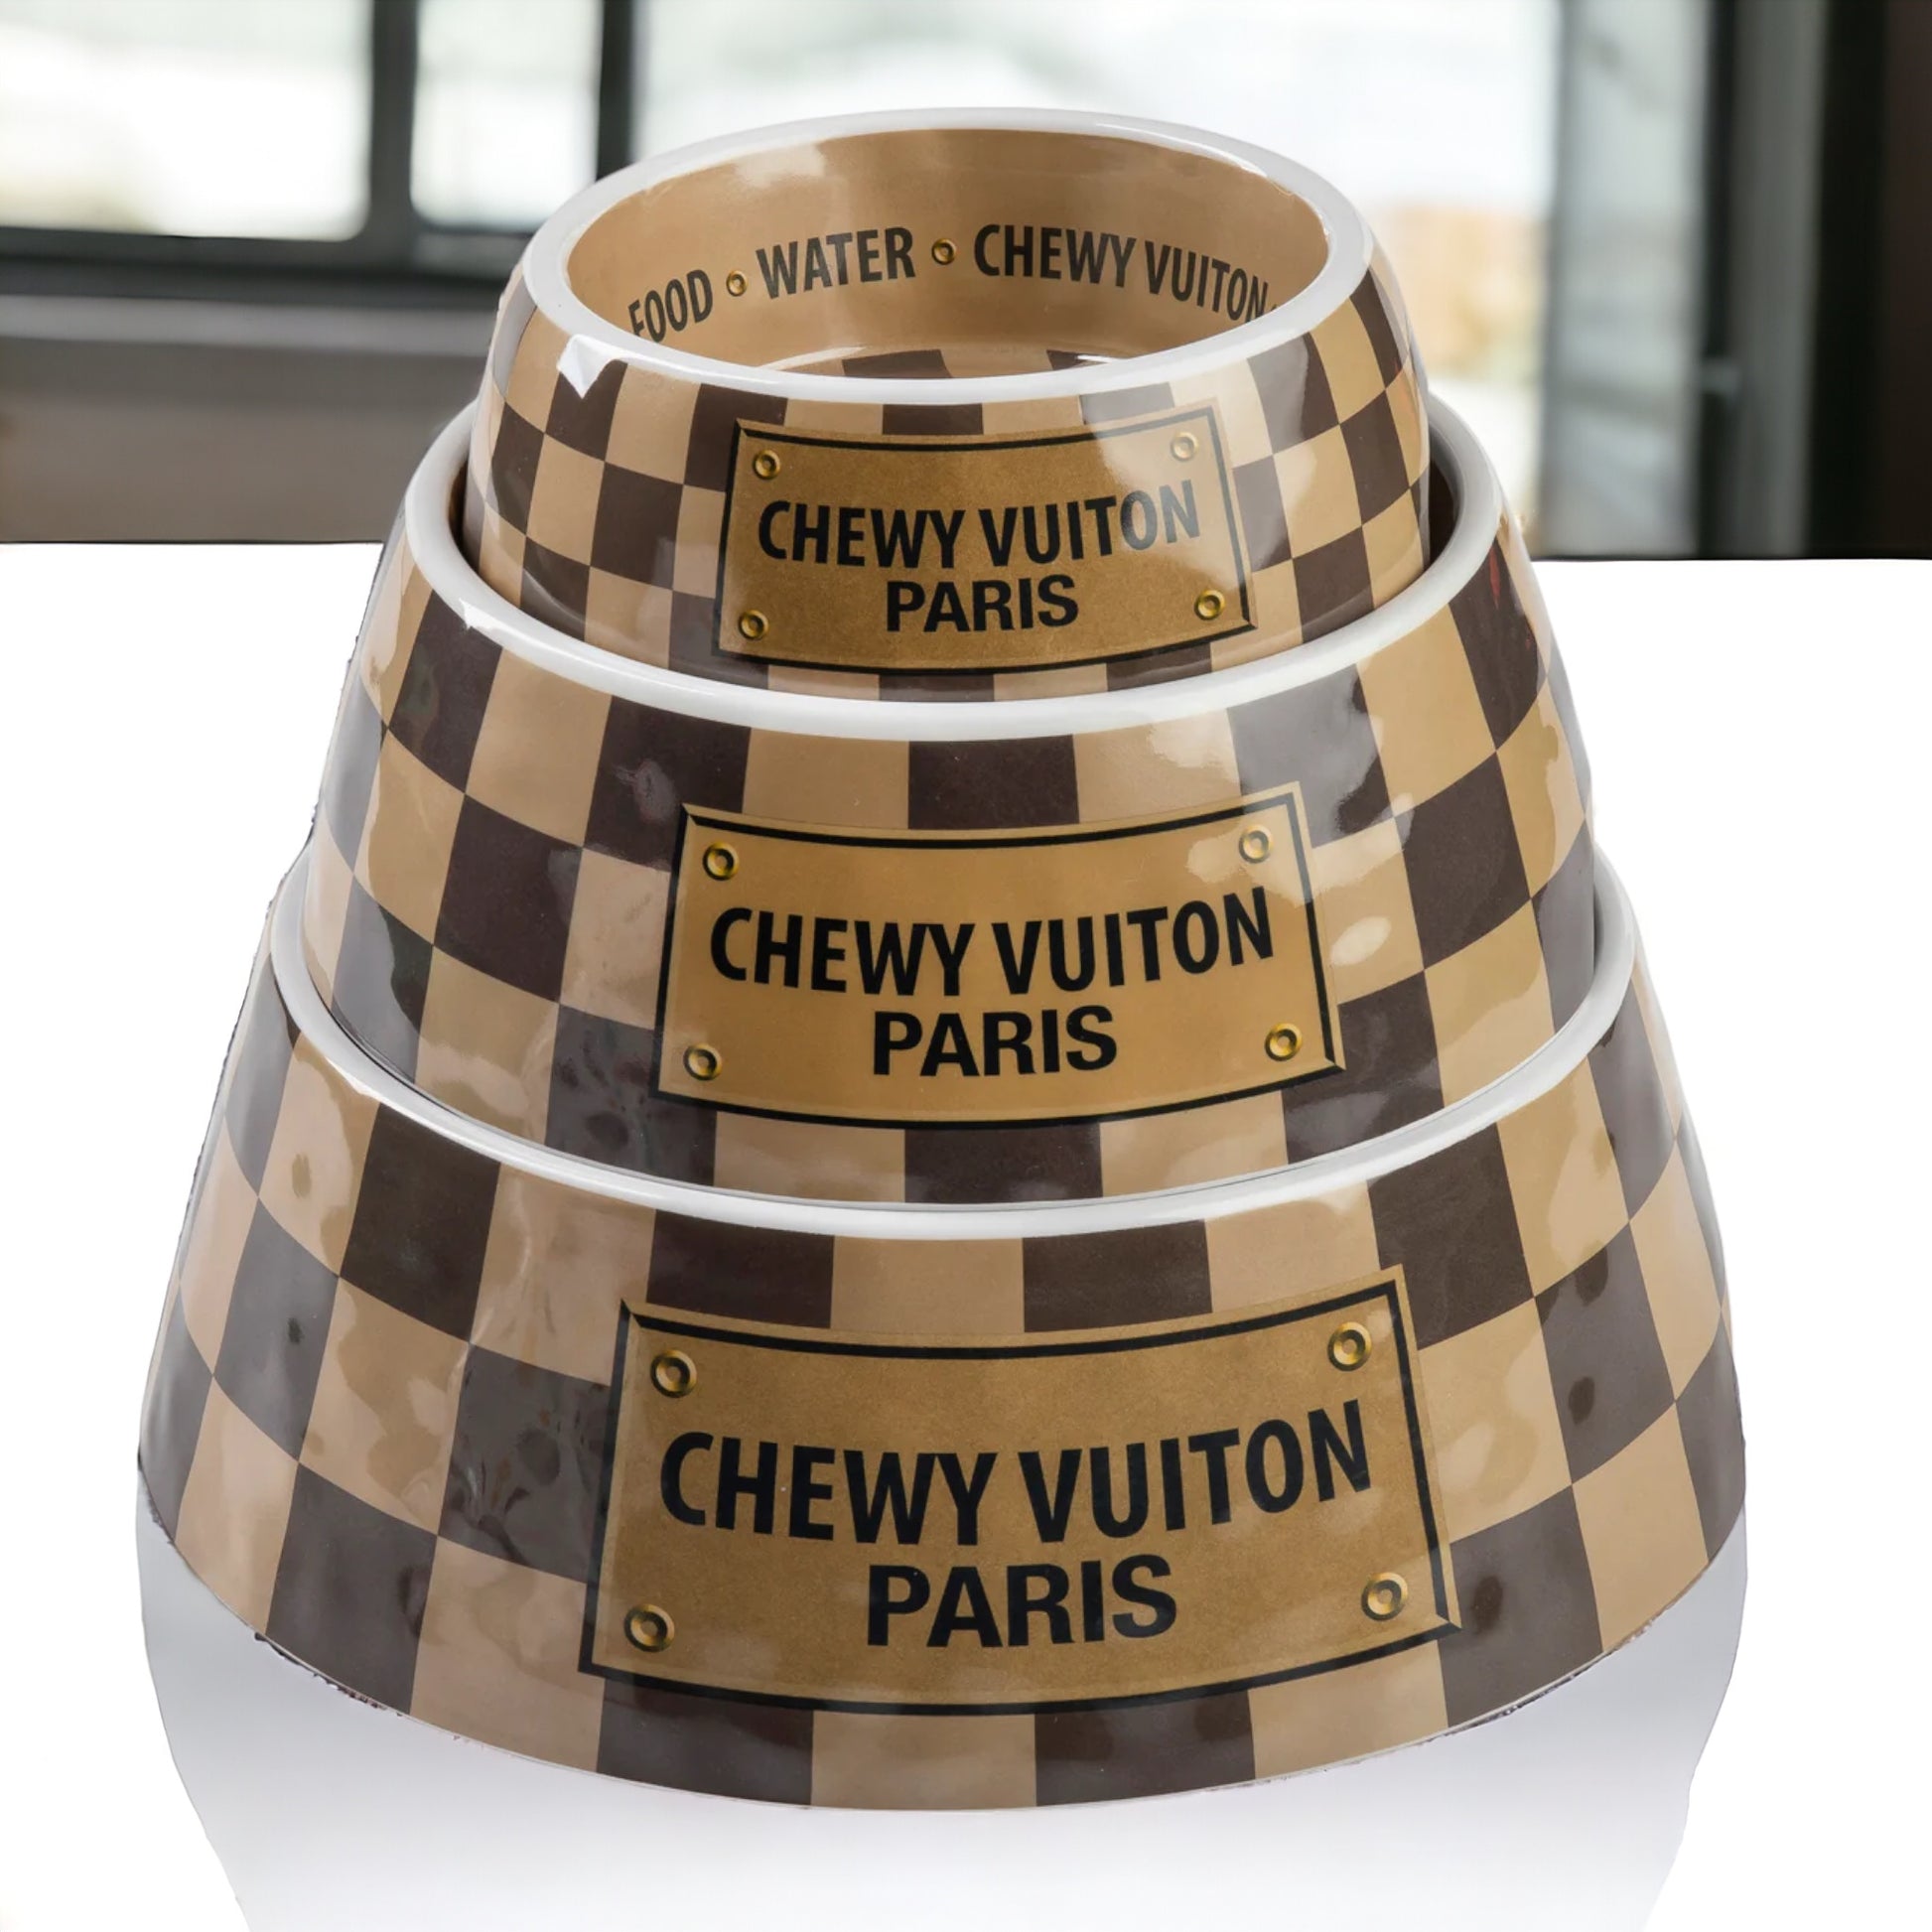 Chewy Vuiton Bowls - Marisa's Shopping Network 